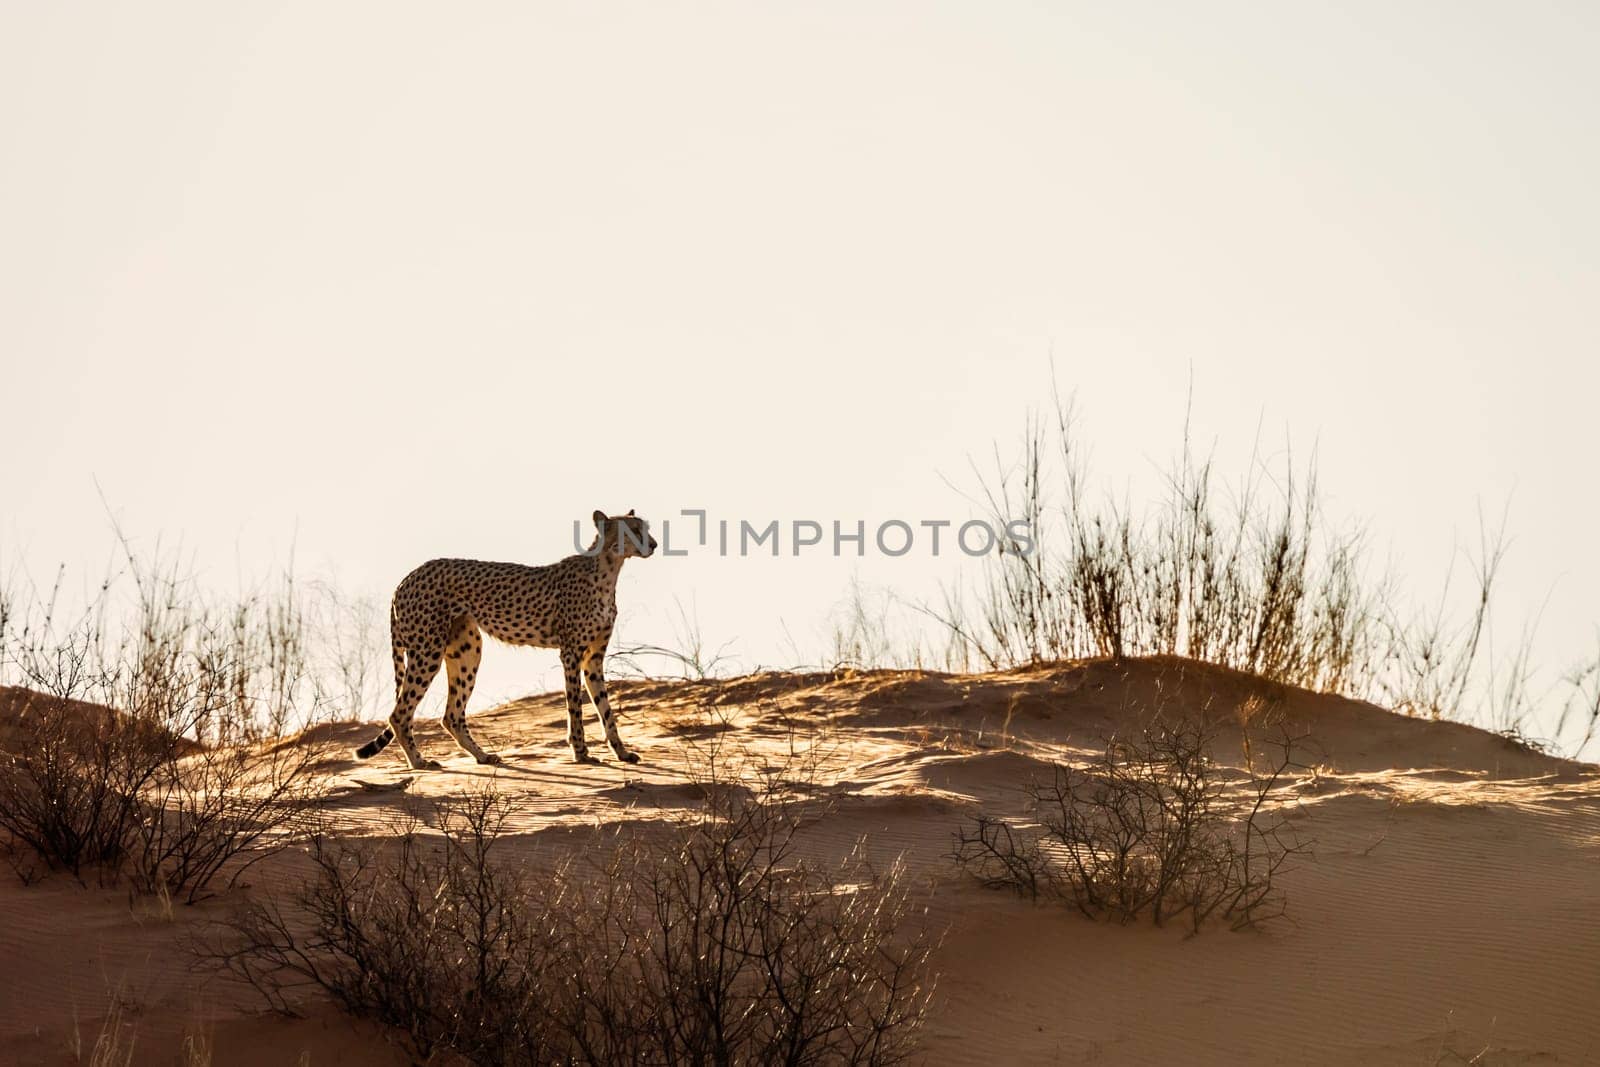 Cheetah walking in sand dune at dawn in Kgalagadi transfrontier park, South Africa ; Specie Acinonyx jubatus family of Felidae